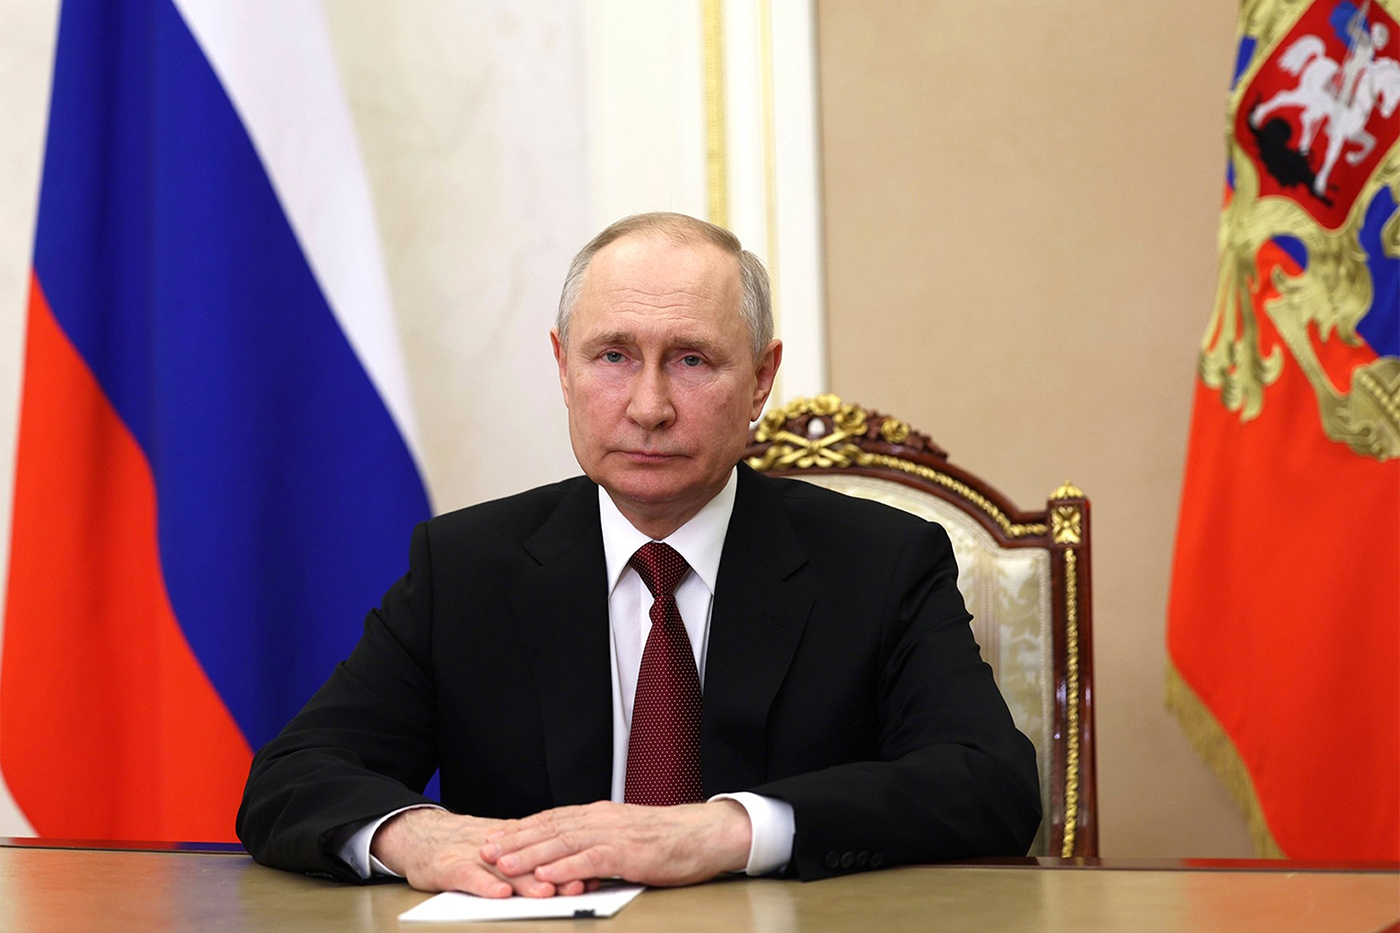 President Valdimir PUtin sitting at a desk